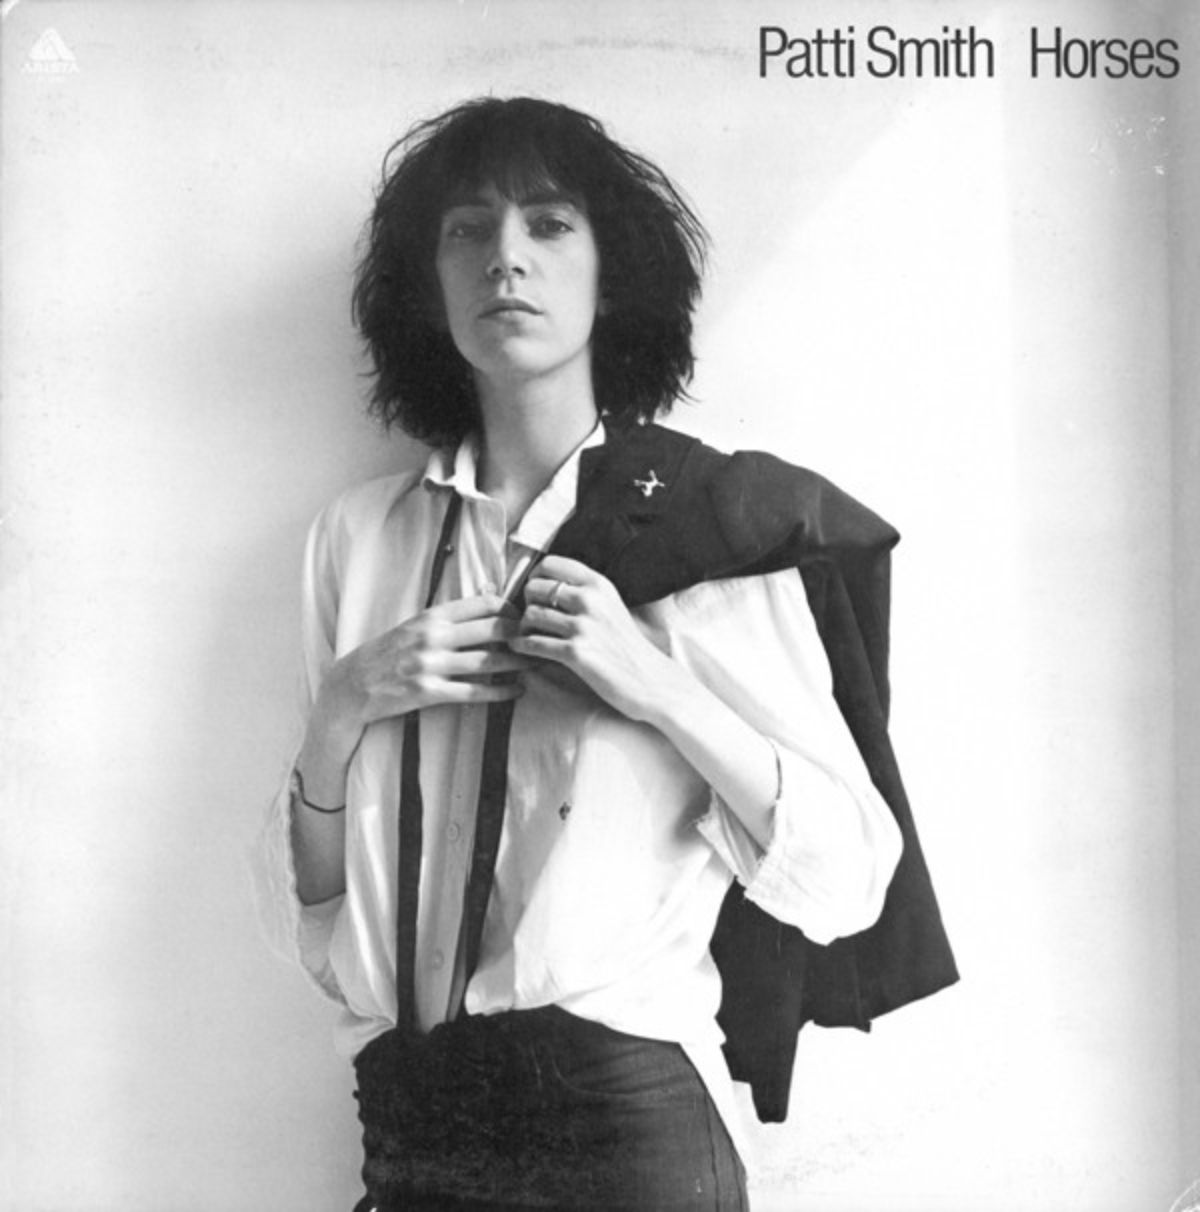 Le premier album de Patti Smith, horses (1975)